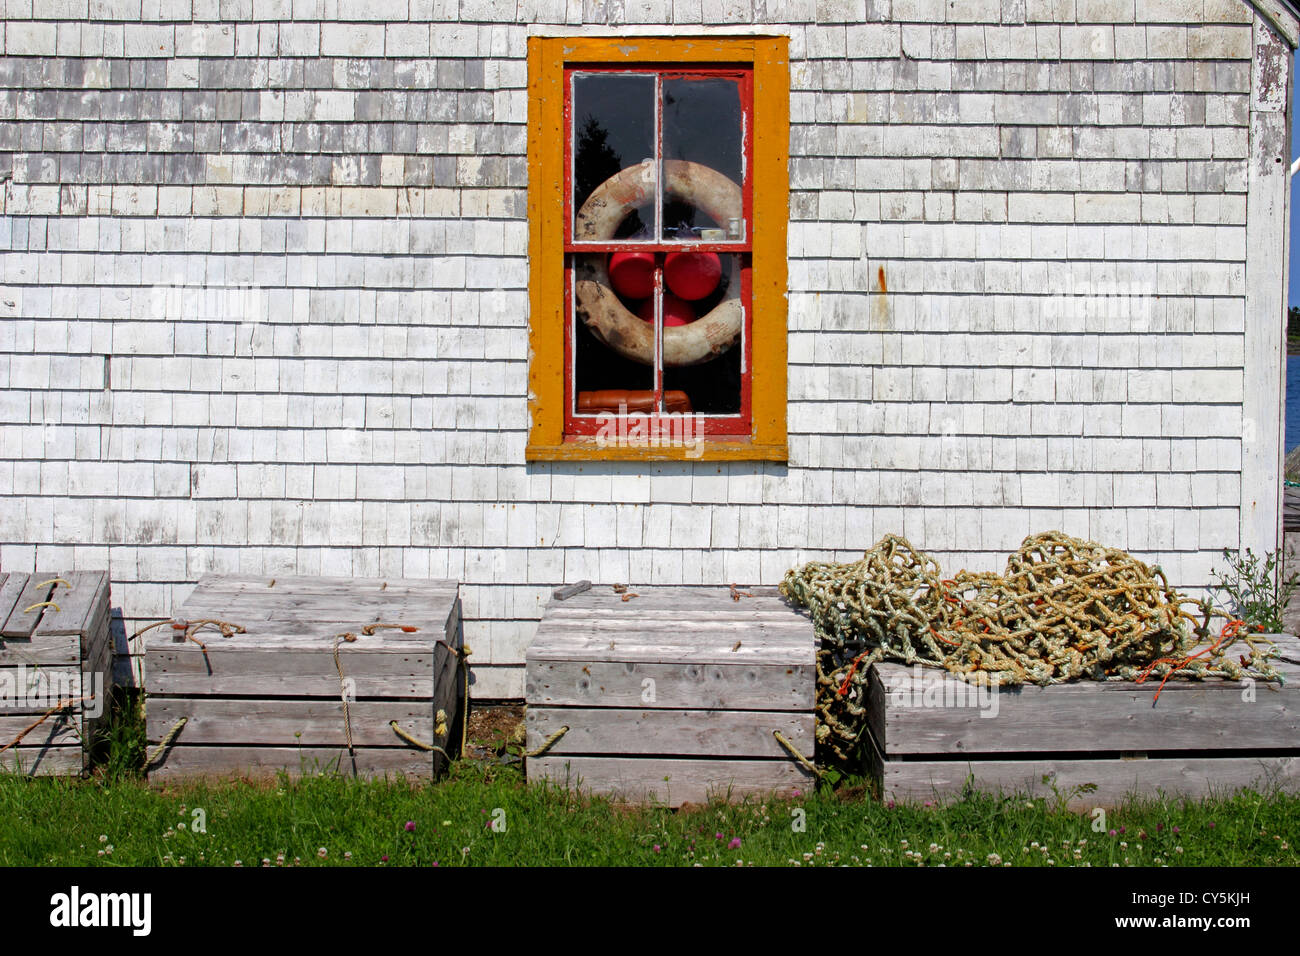 Canada Nova Scotia Atlantic Maritime Provinces Lunenburg Blue Rocks lobster shack window Stock Photo